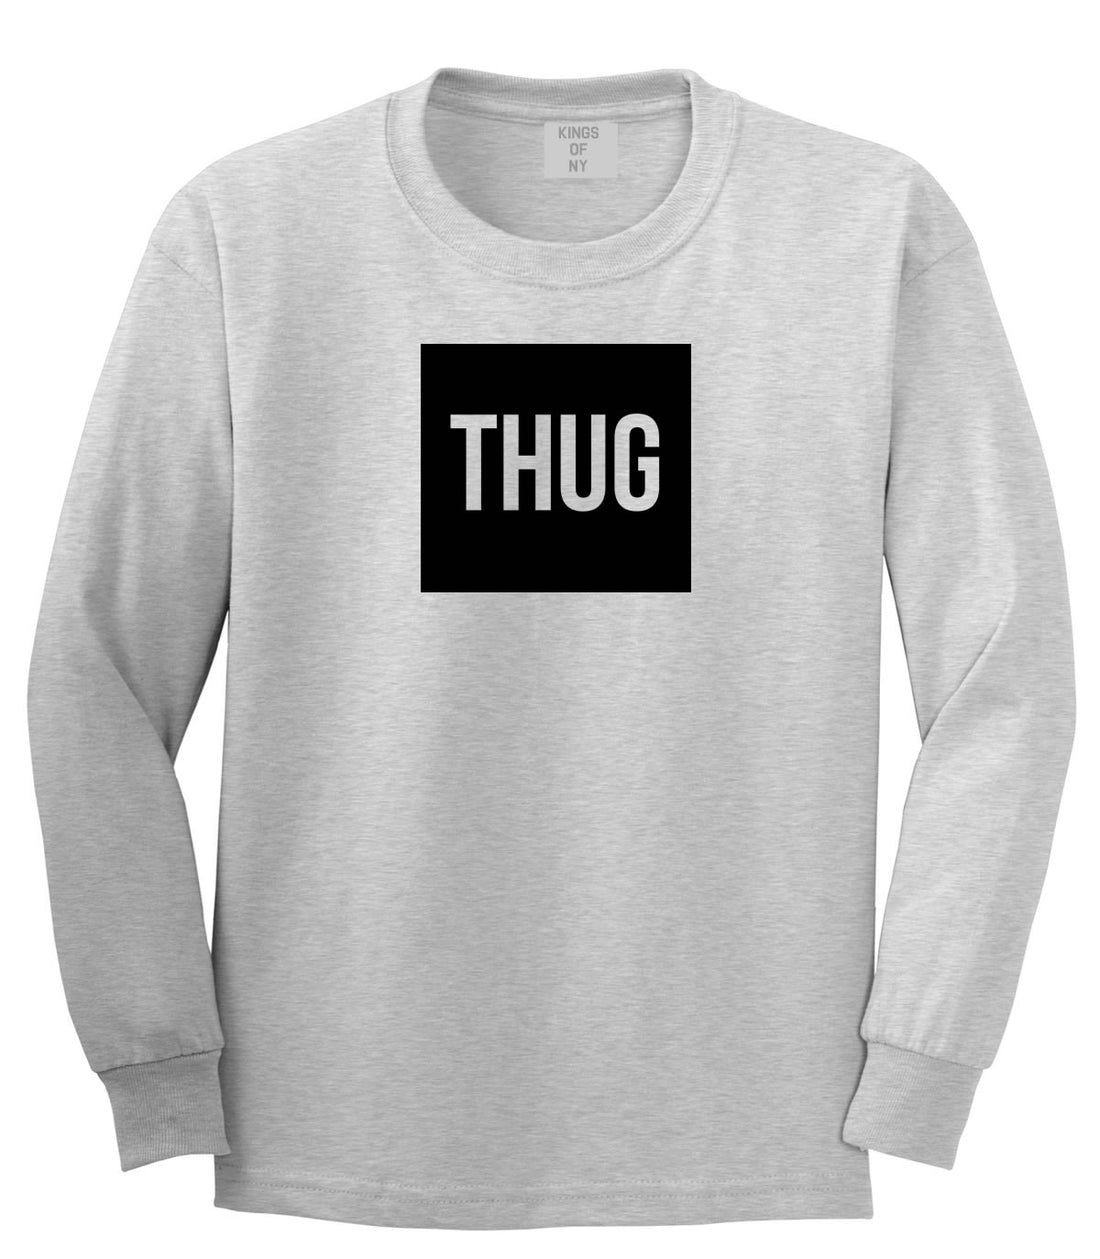 Thug Gangsta Box Logo Boys Kids Long Sleeve T-Shirt in Grey by Kings Of NY